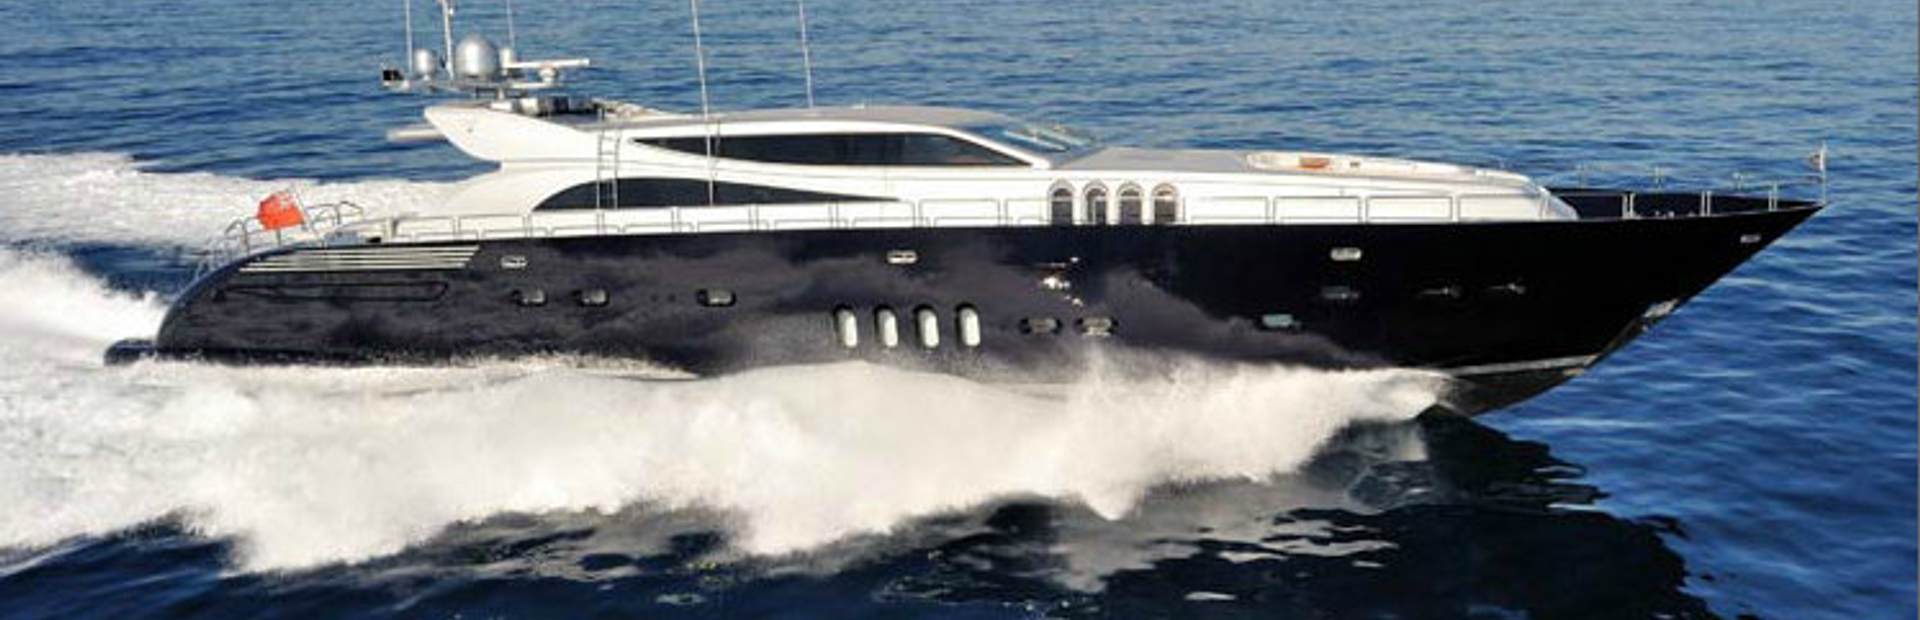 Leopard 34 Yacht